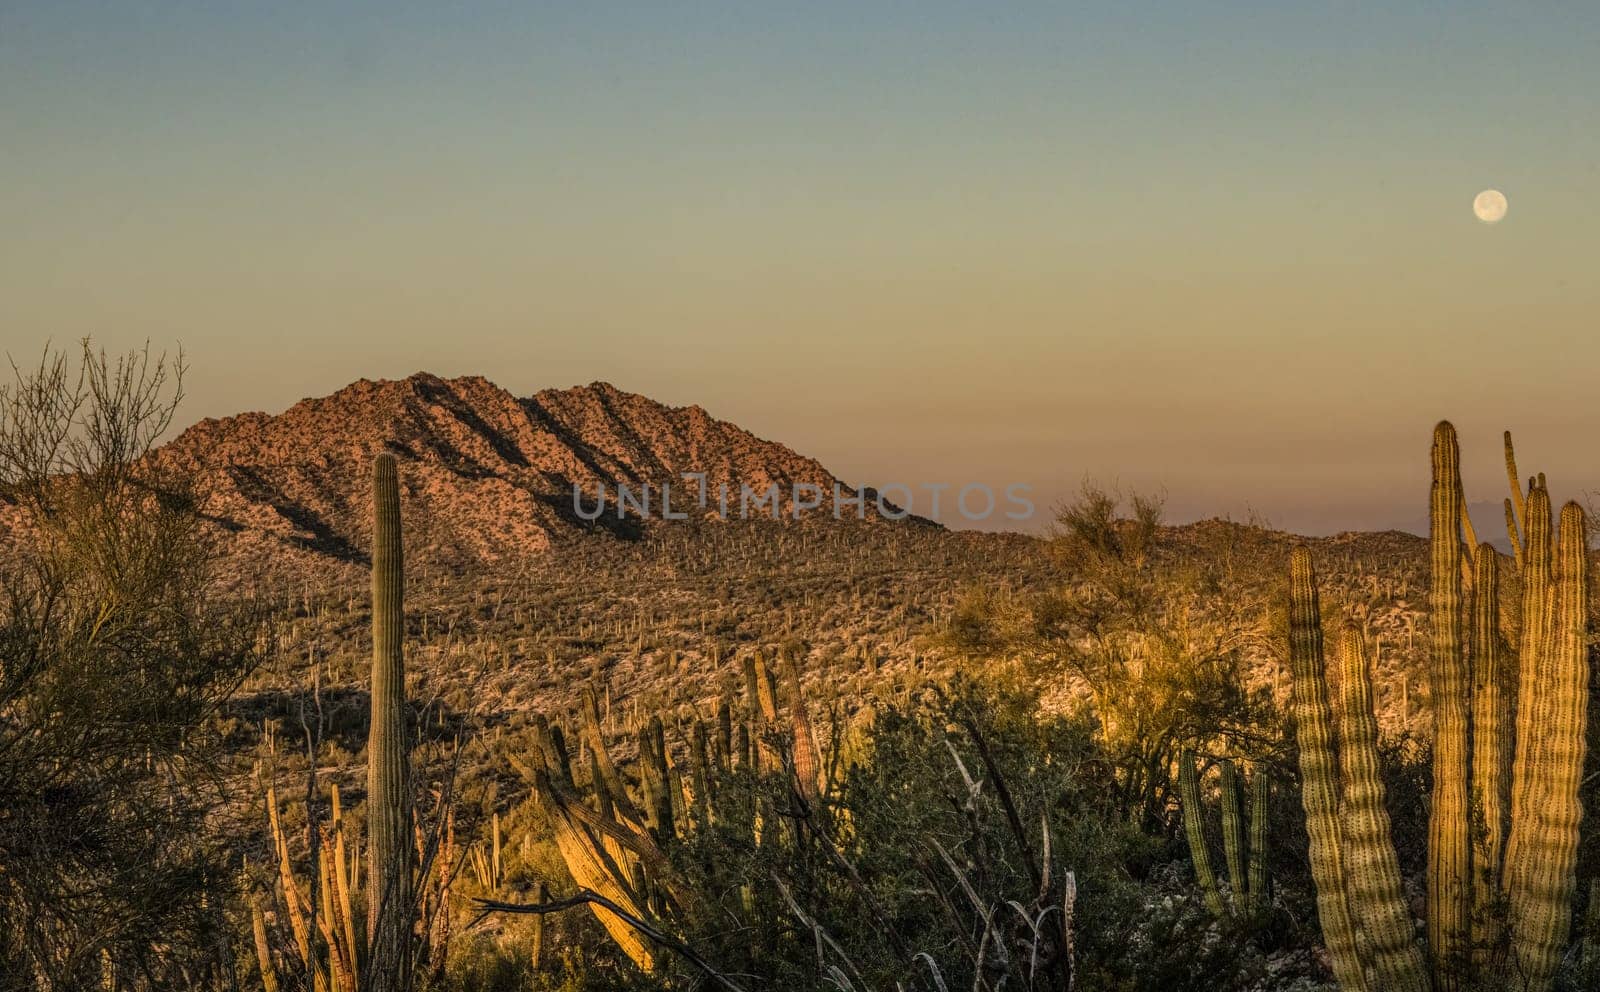 Desert Mountain Organ Pipe in sunrise silhouette by lisaldw